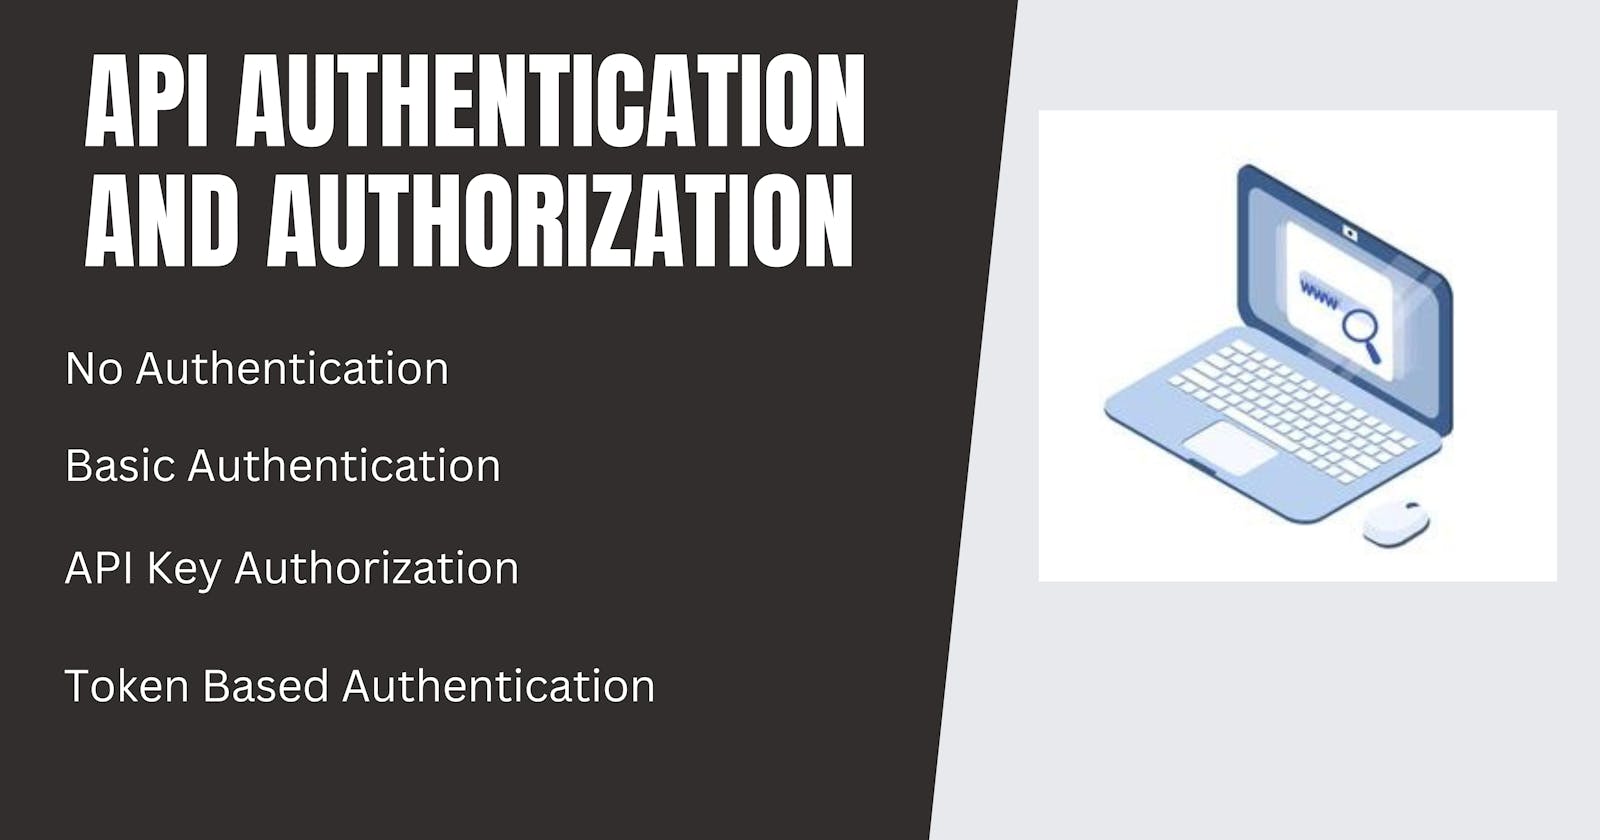 API Authentication and Authorization